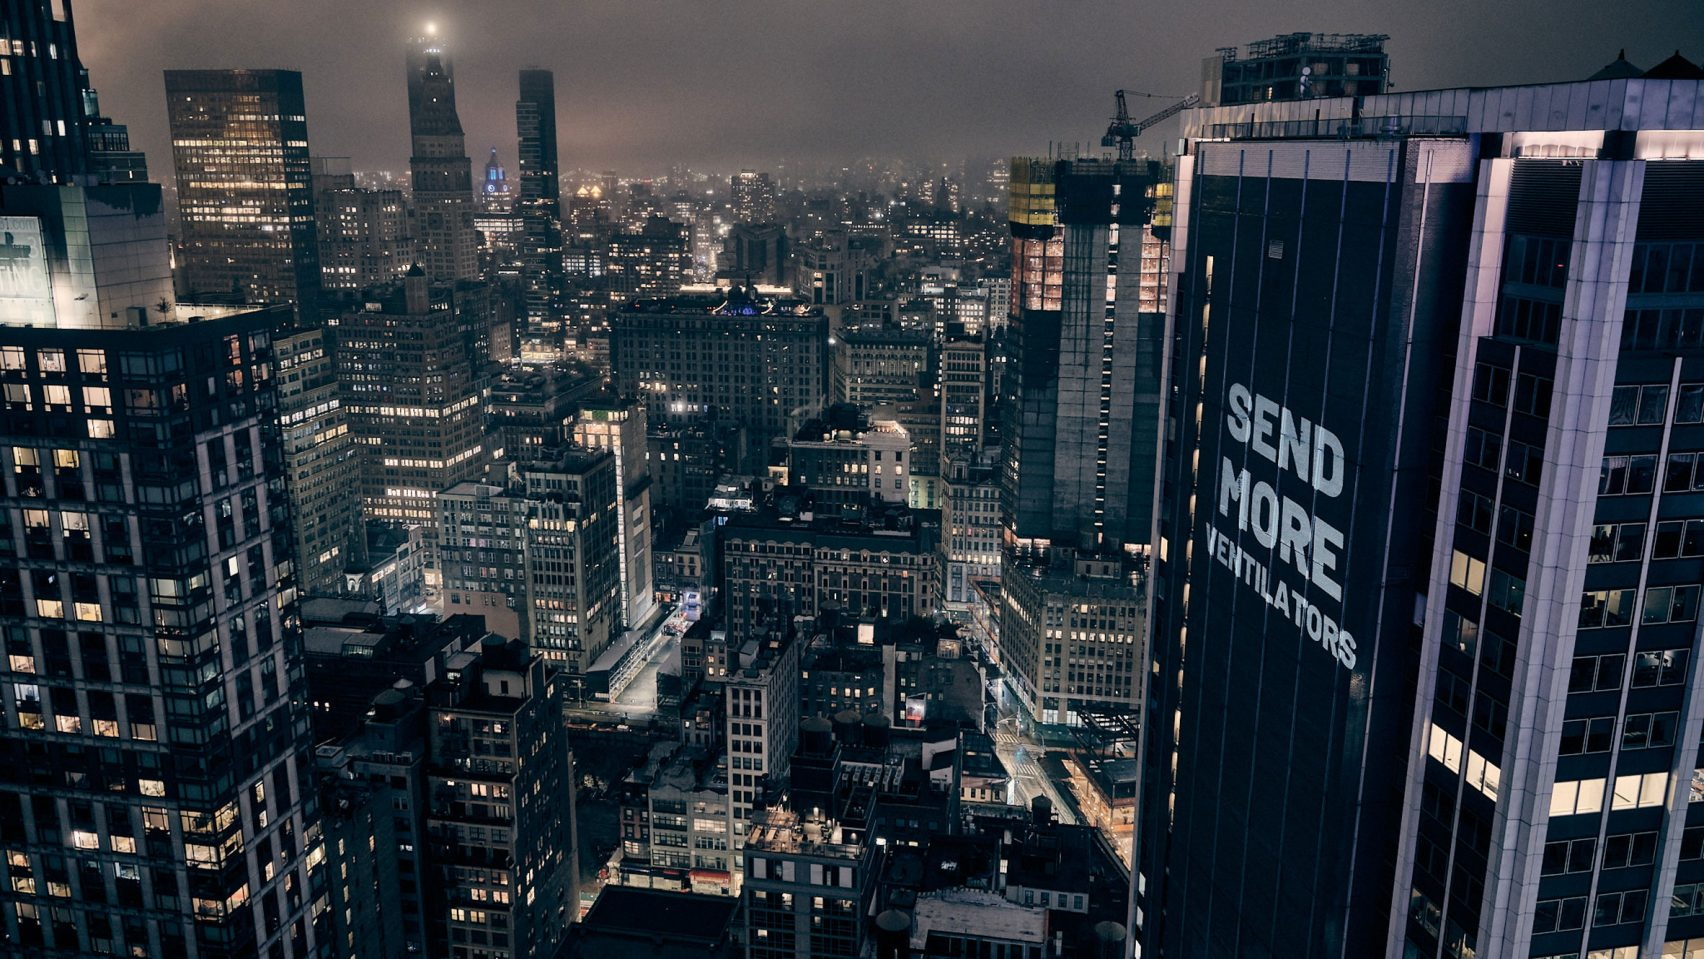 Nέα Υόρκη: Καλλιτεχνική ομάδα διαμαρτύρεται για την επιδημία με προβολή συνθημάτων σε ουρανοξύστη